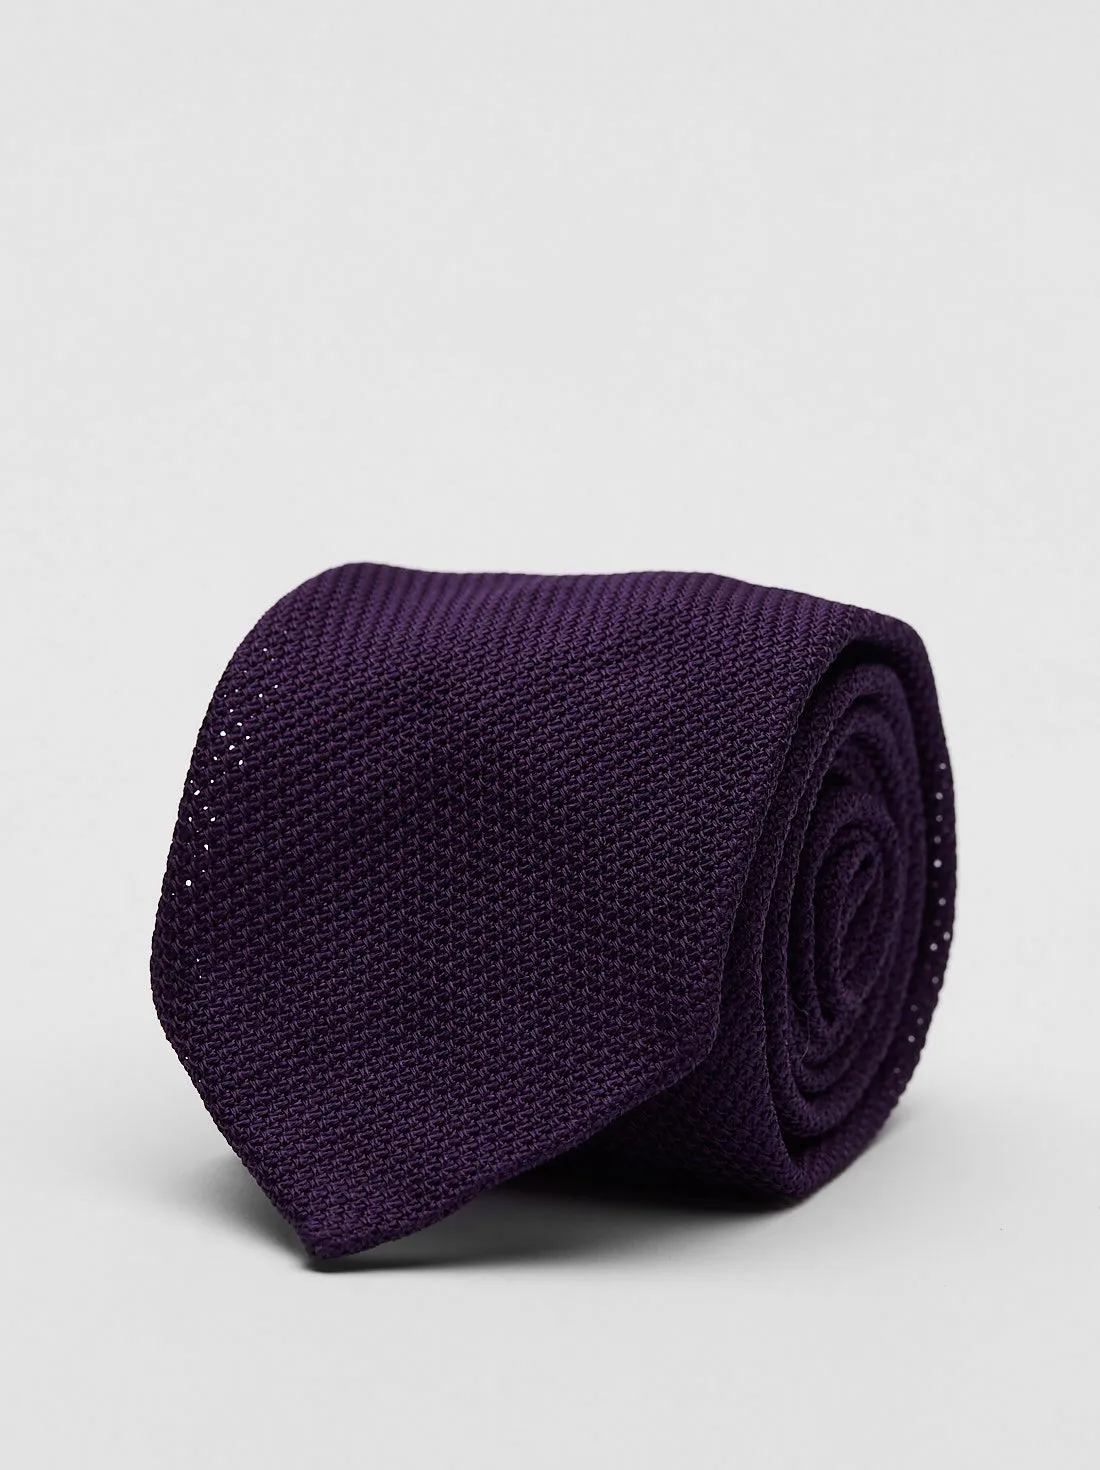 Purple Grenadine Tie